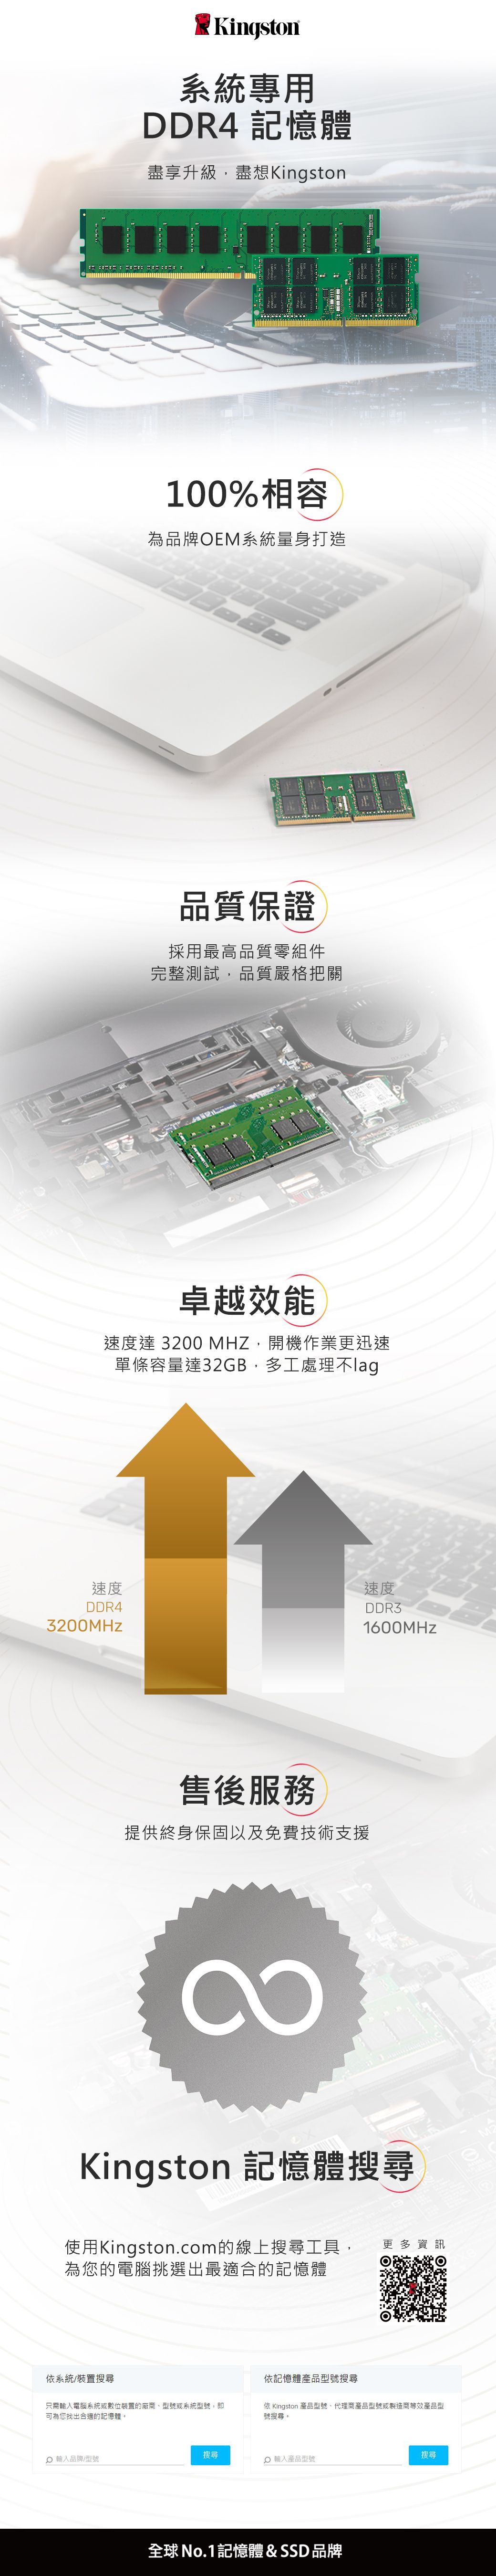 Kingston DDR4 2666 32GB 品牌專用桌上型記憶體(KCP426ND8/32